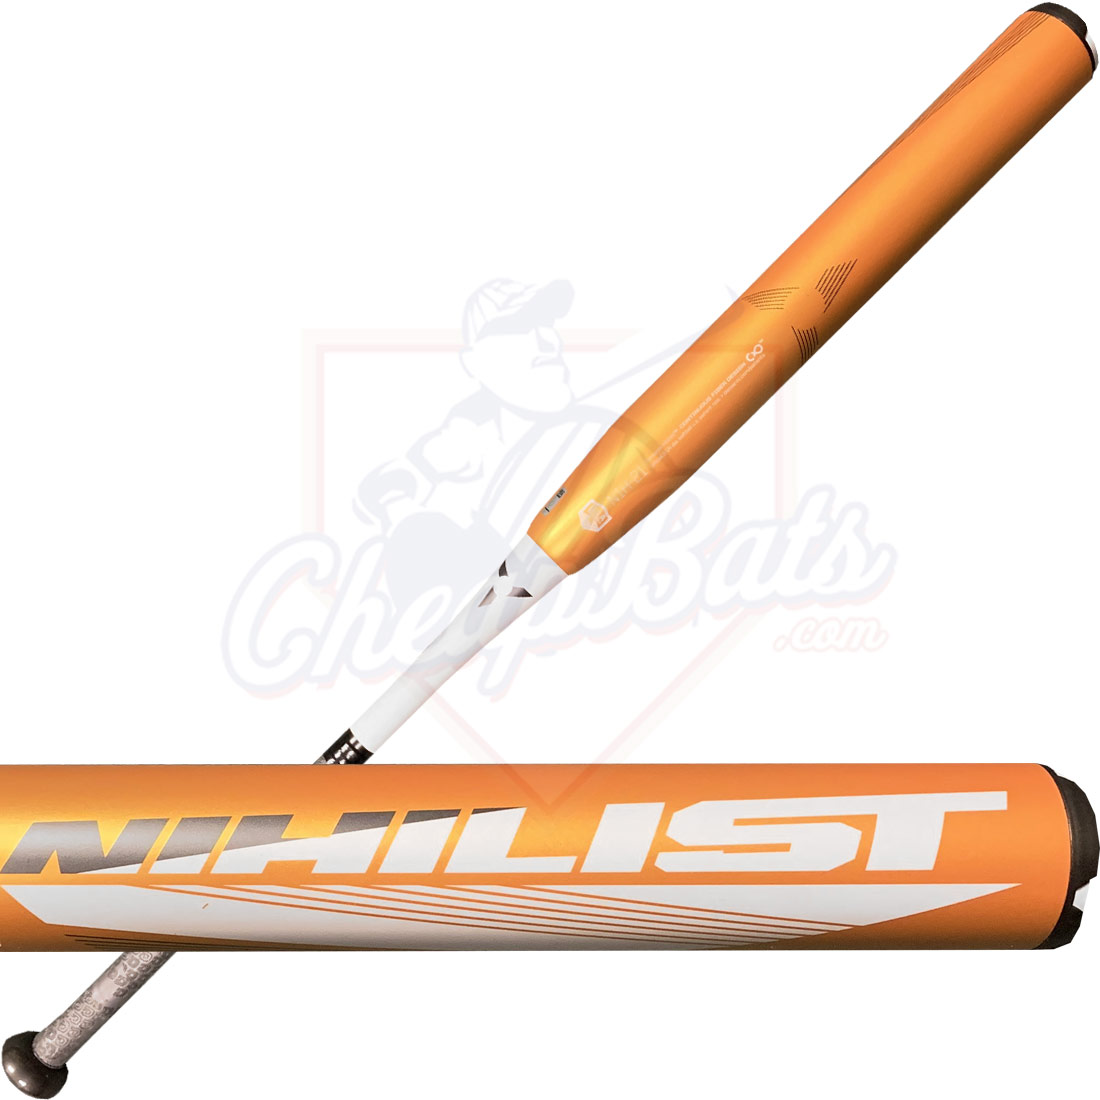 2021 DeMarini Nihlist Slowpitch Softball Bat Balanced ASA USA WTDXNIH-21